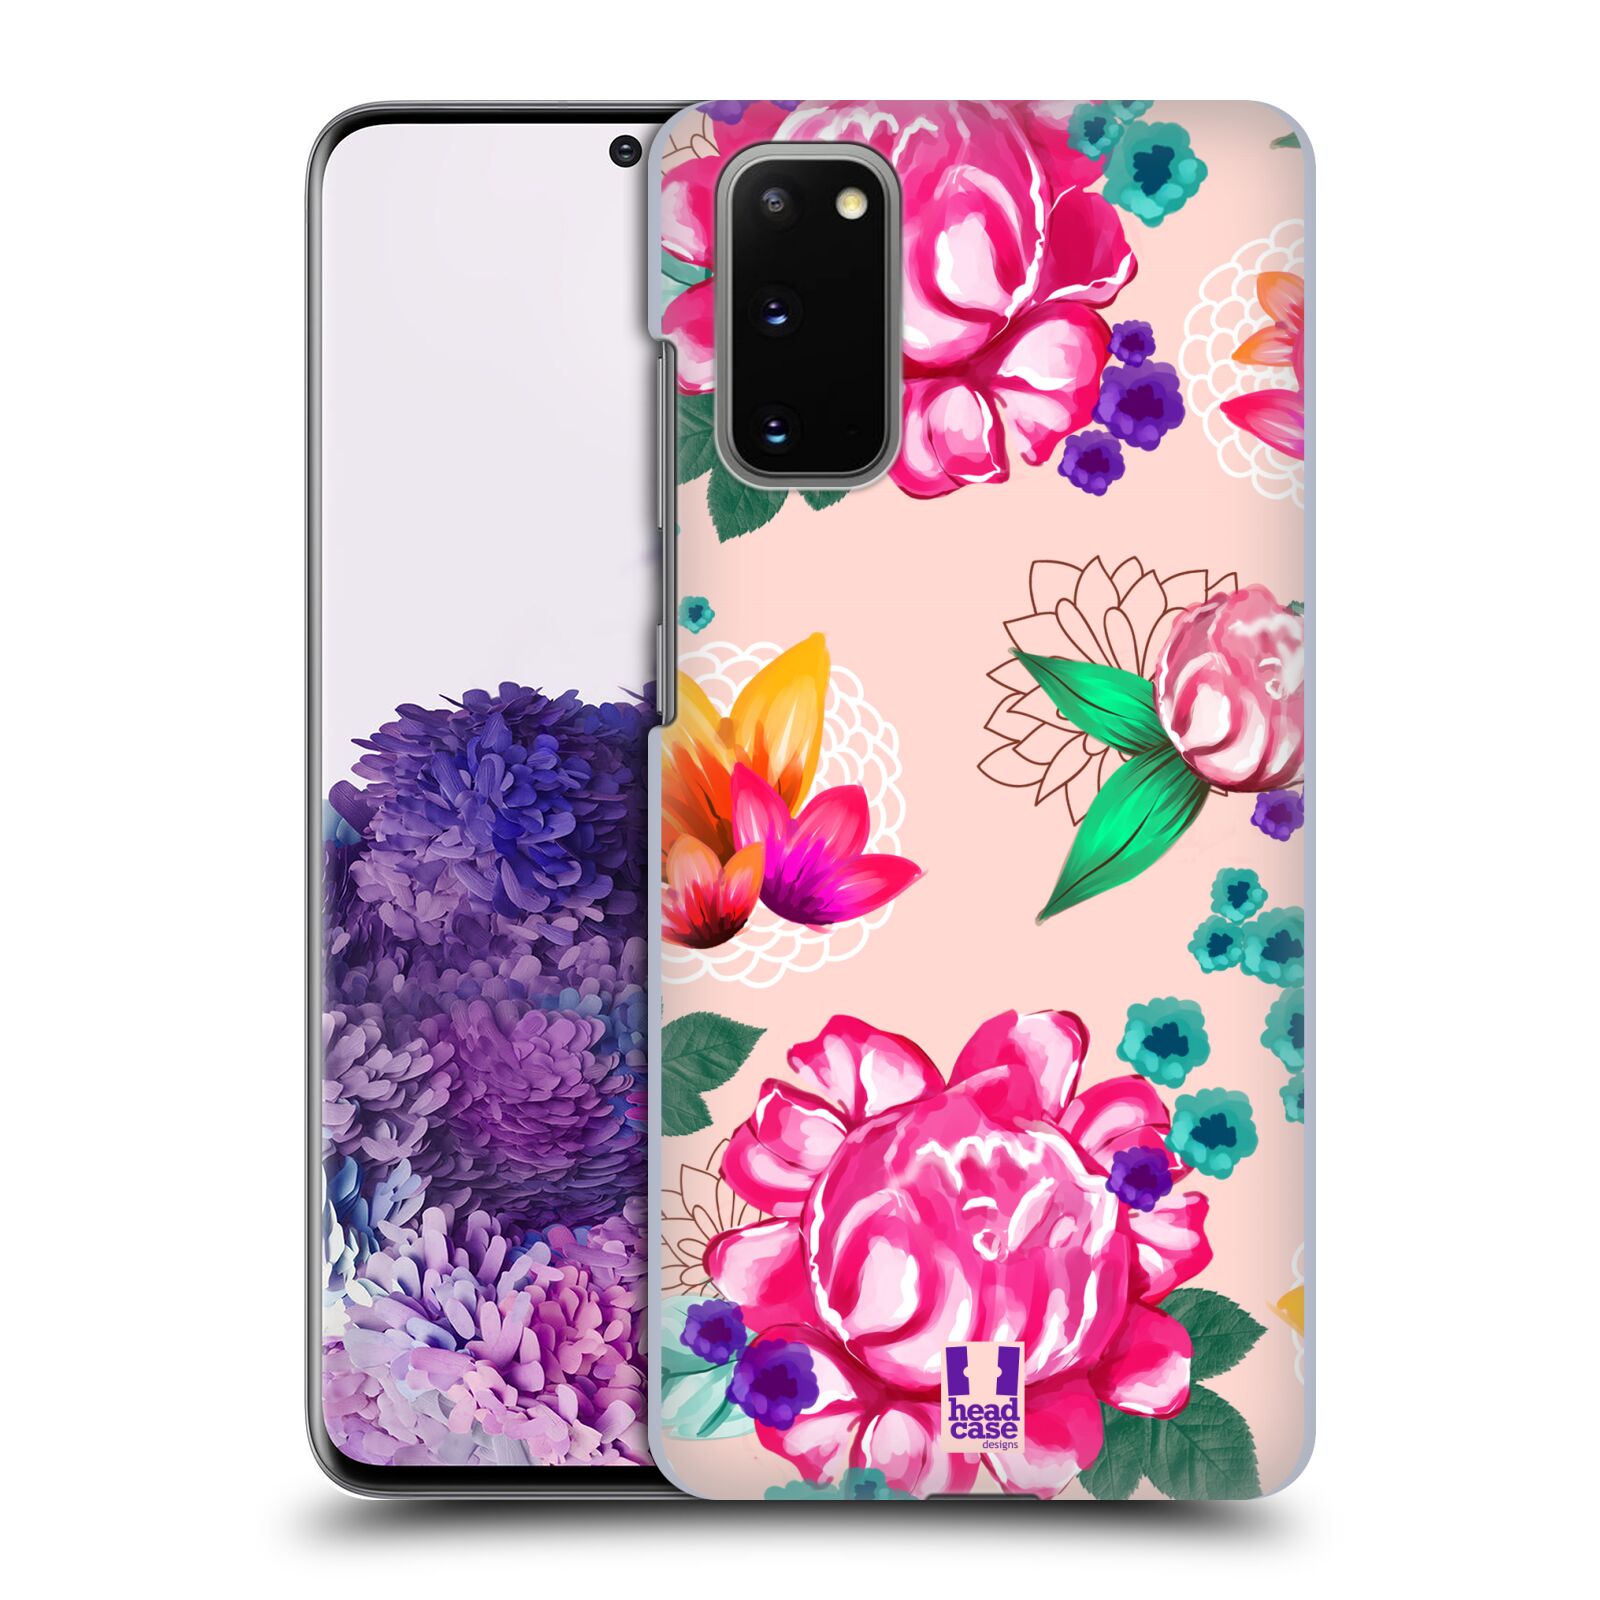 Pouzdro na mobil Samsung Galaxy S20 - HEAD CASE - vzor Malované květiny barevné SVĚTLE RŮŽOVÁ